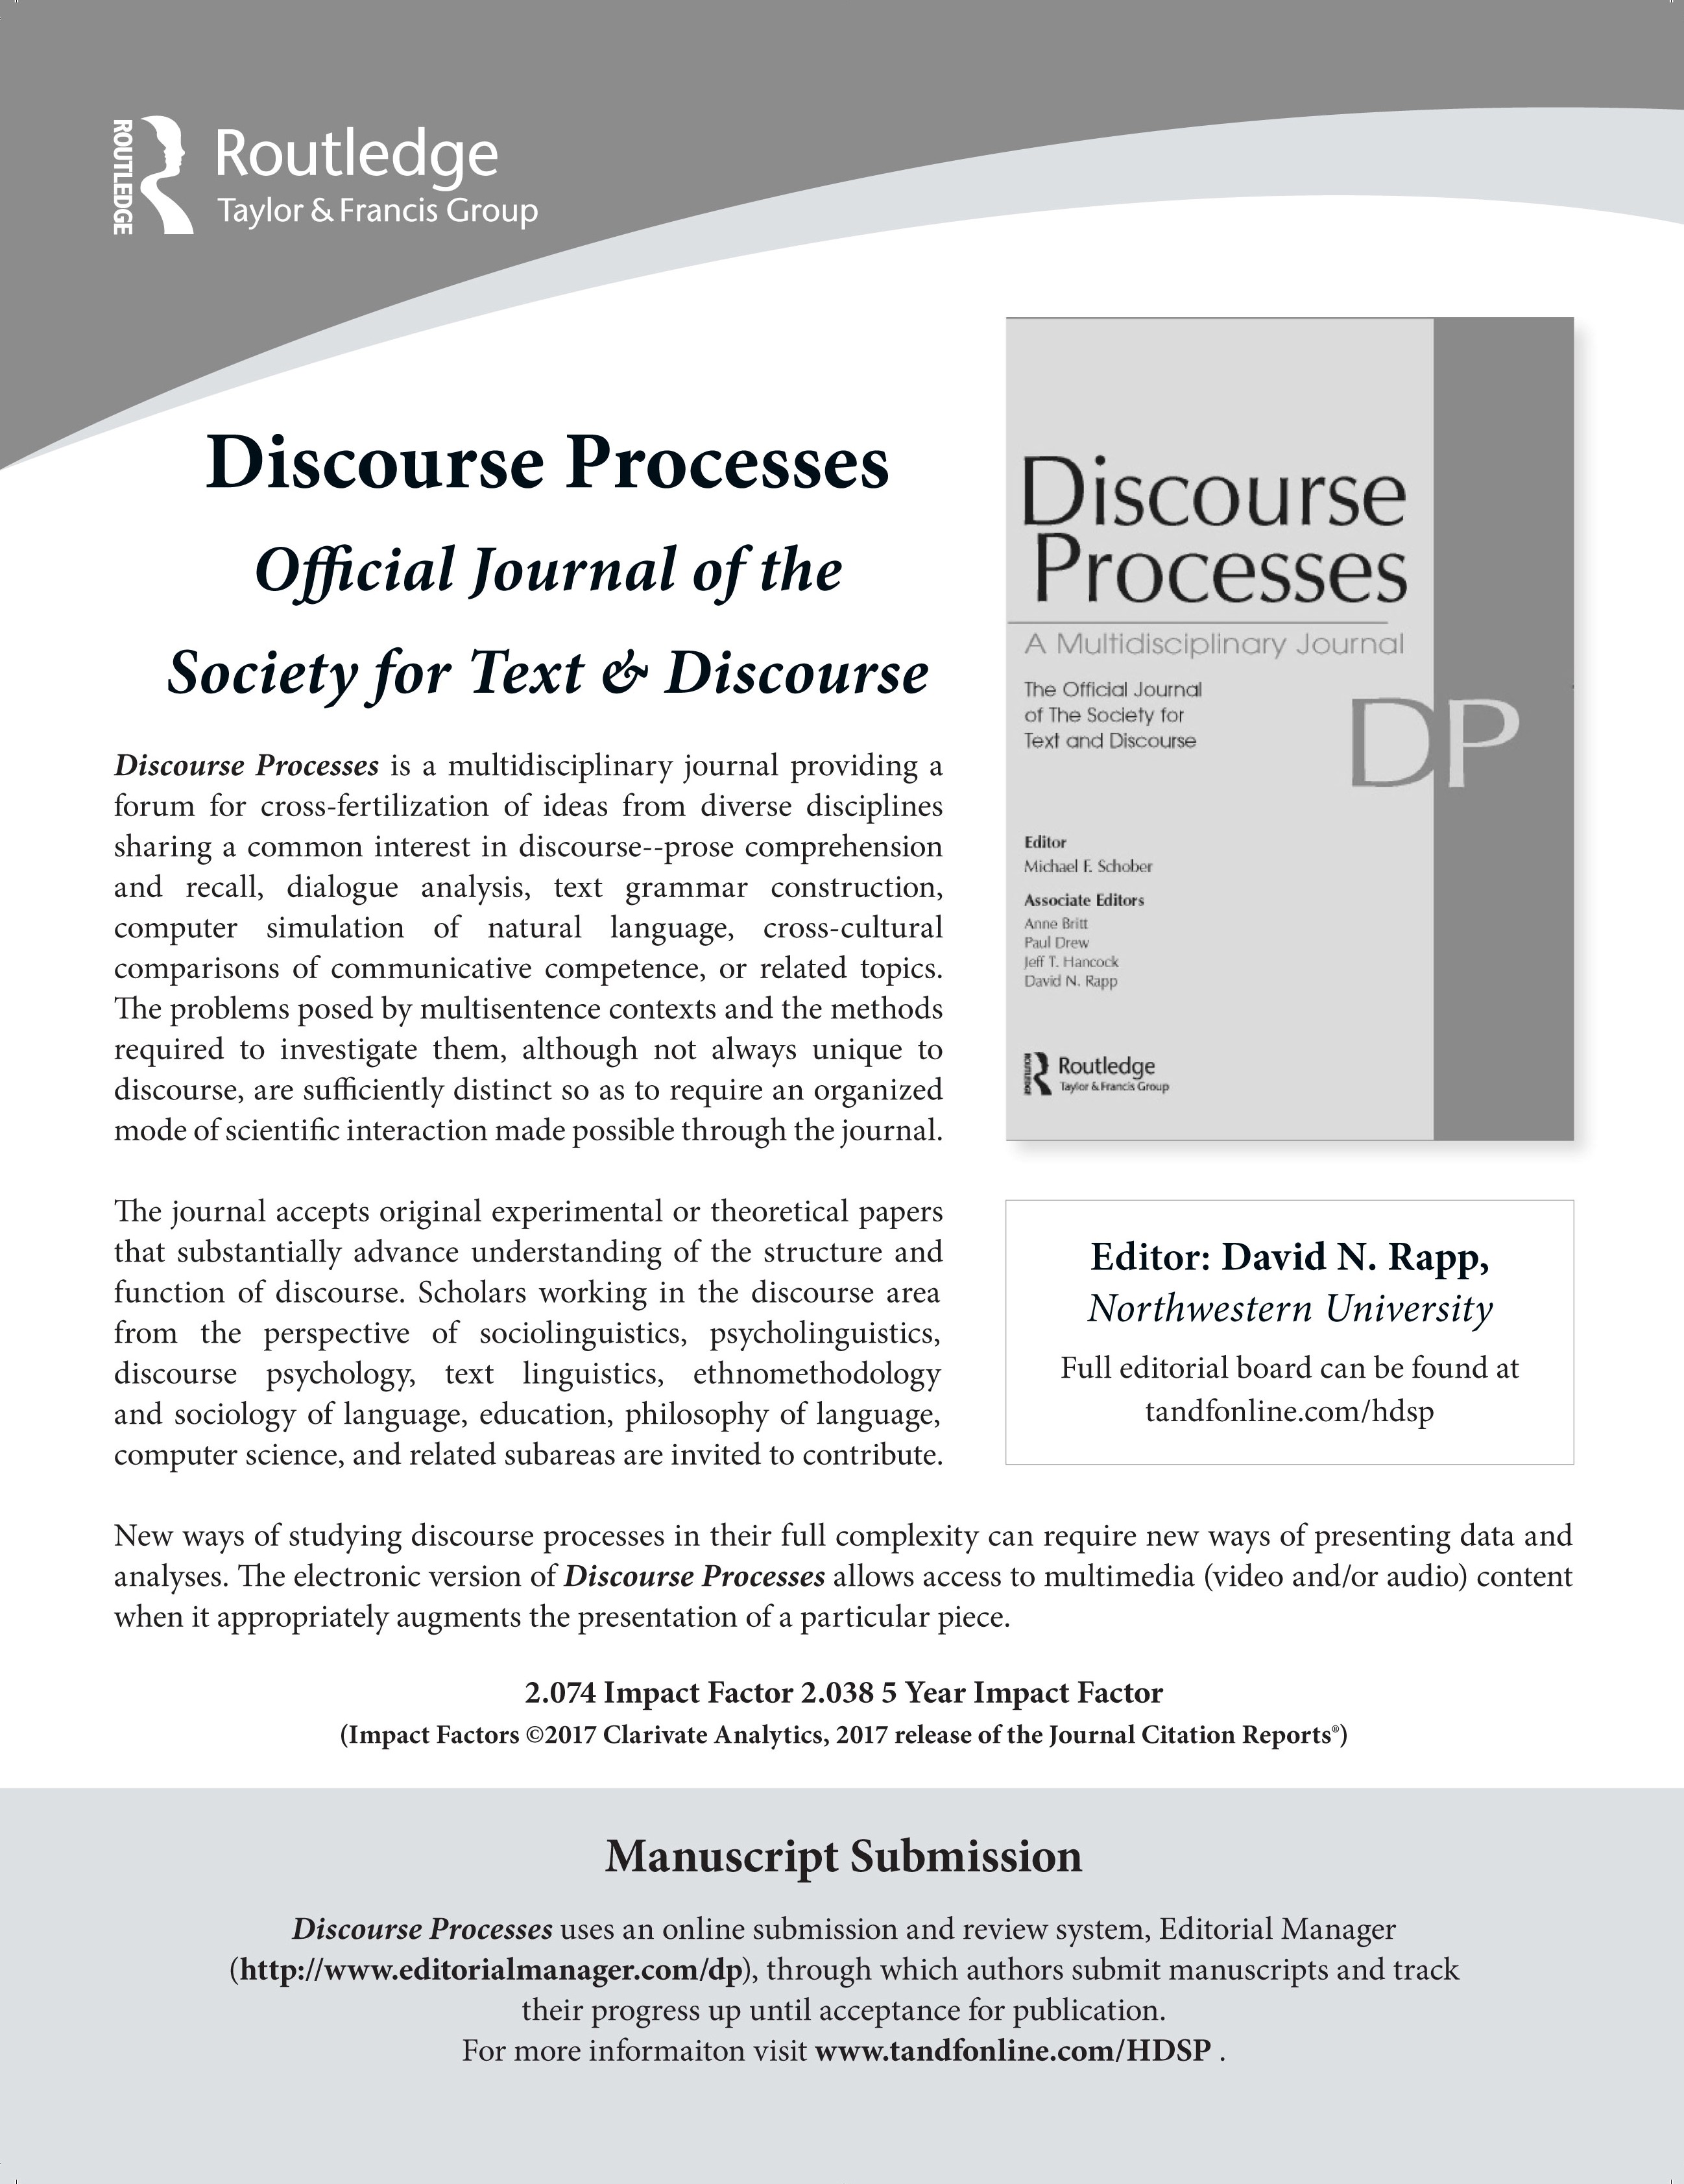 Discourse Processes Ad